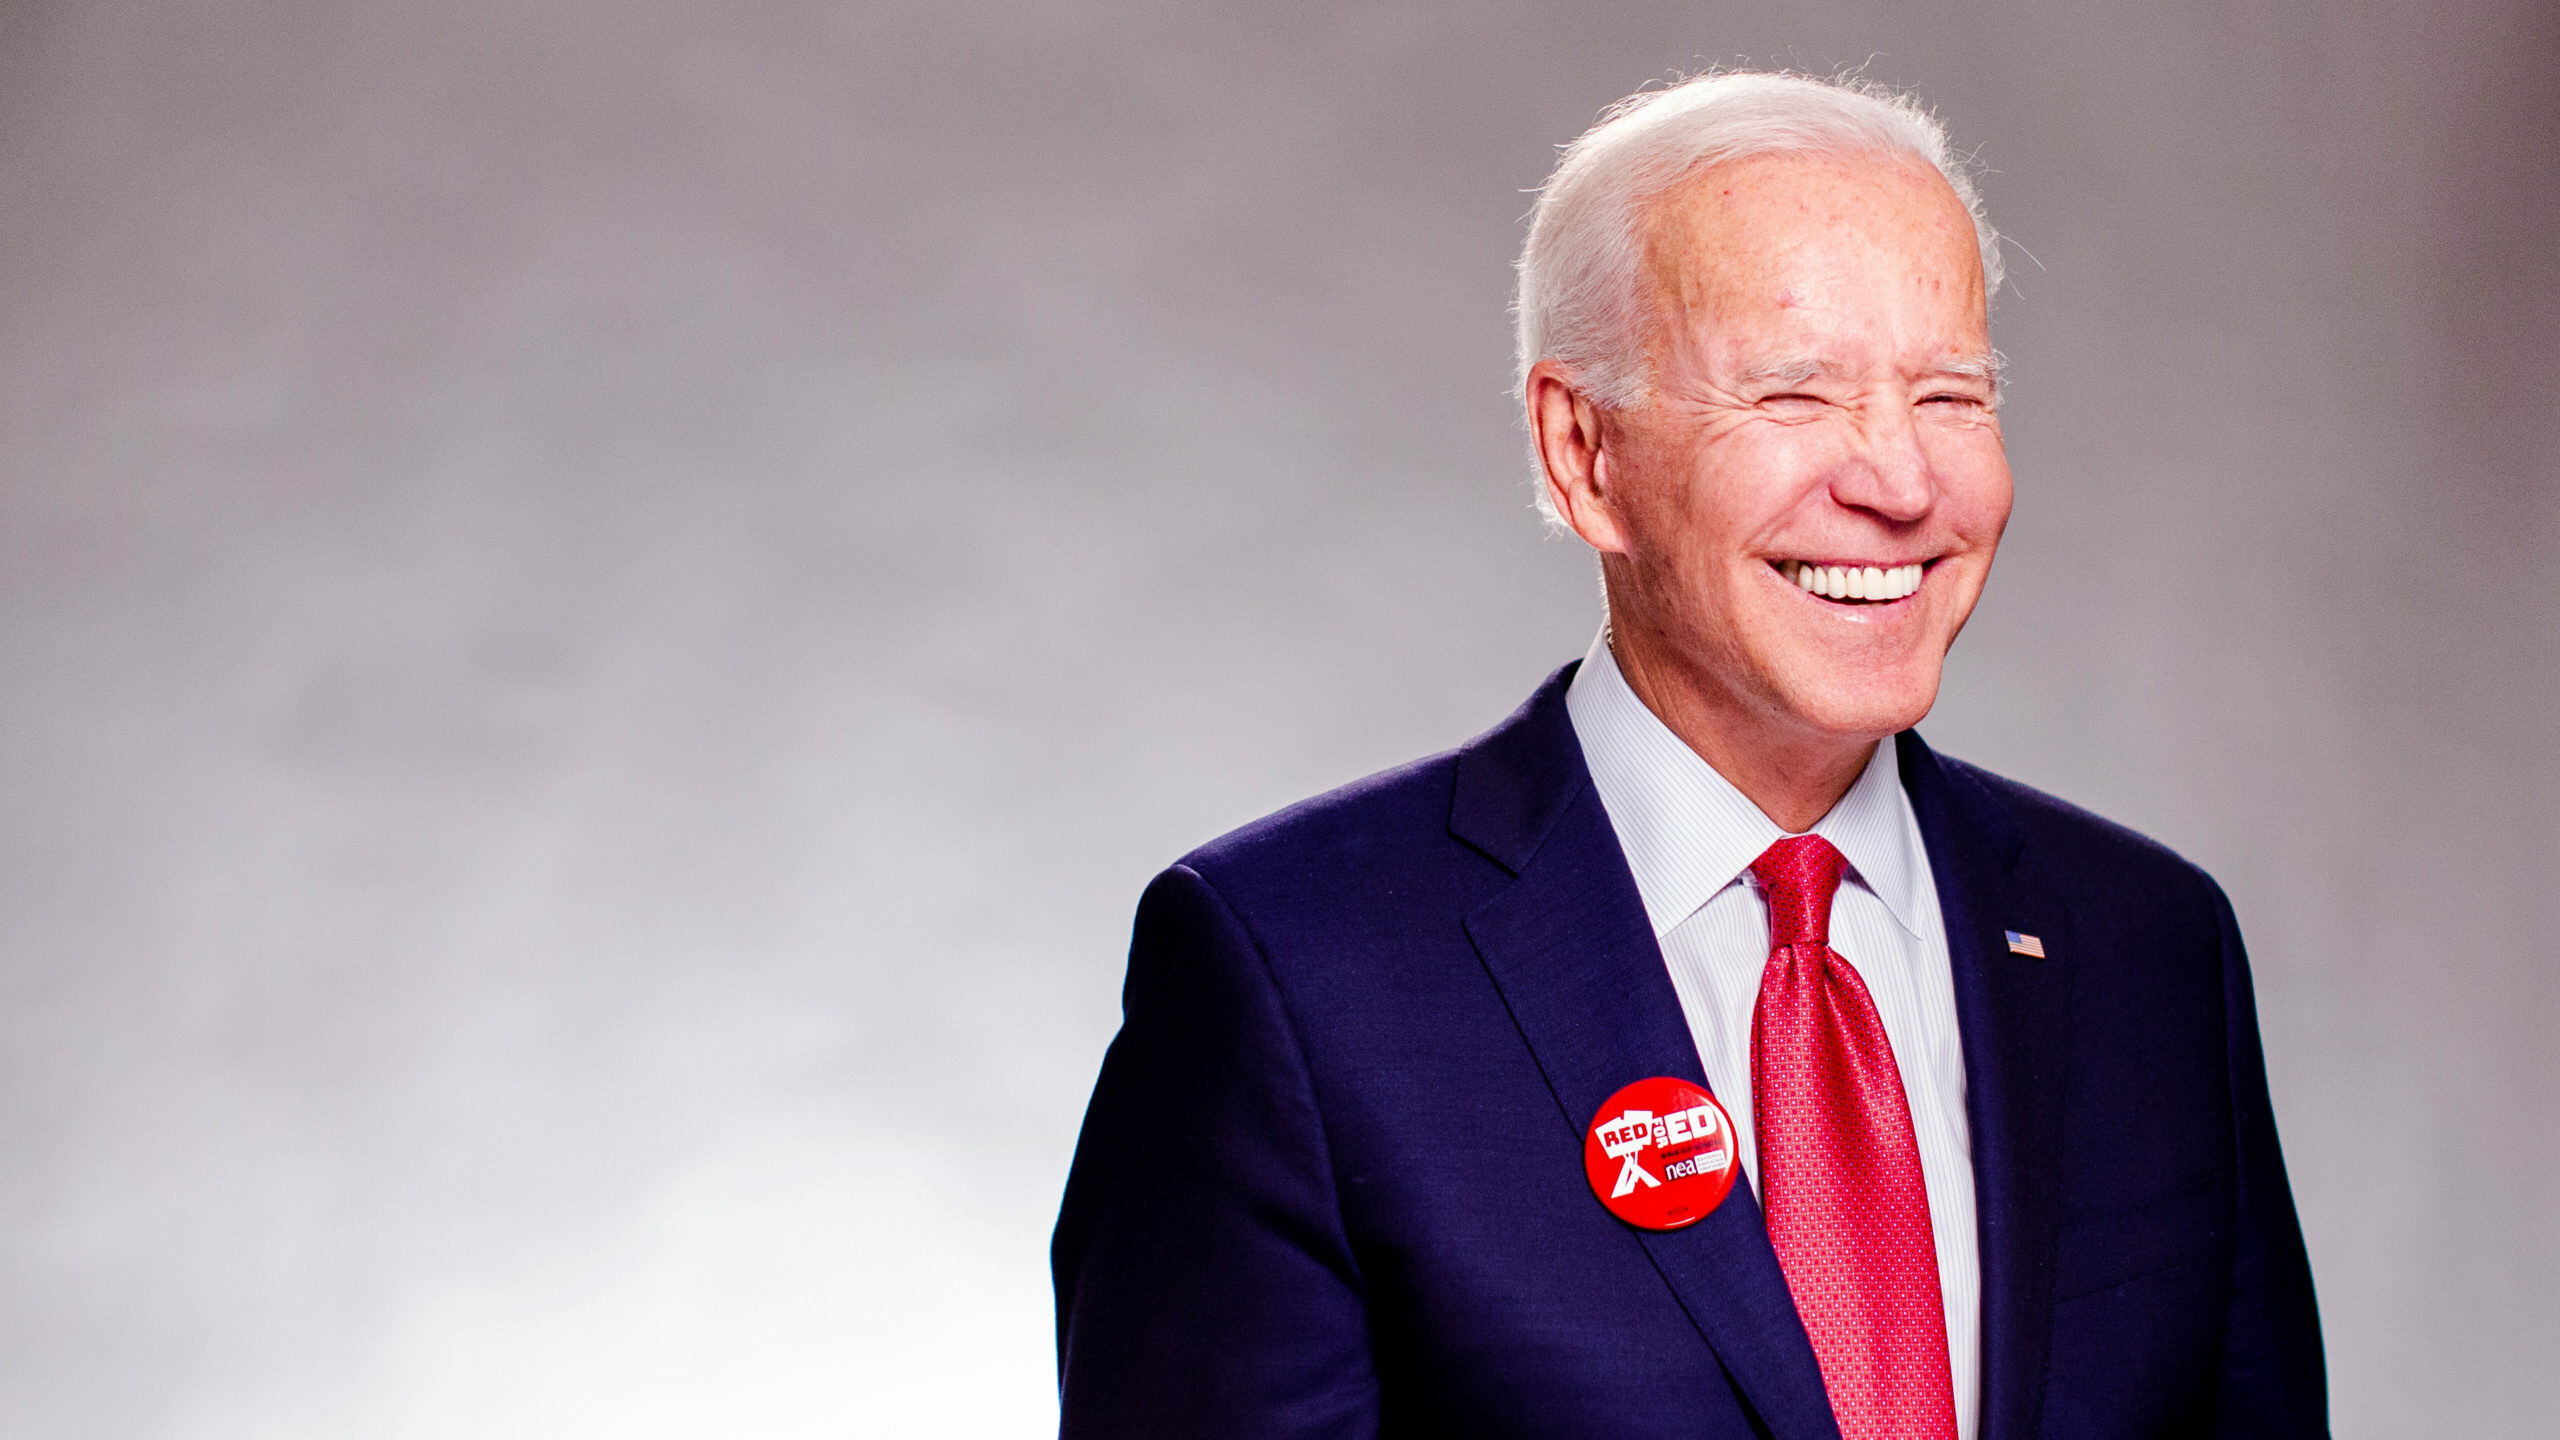 Joe Biden: The first president from Delaware. 2560x1440 HD Background.